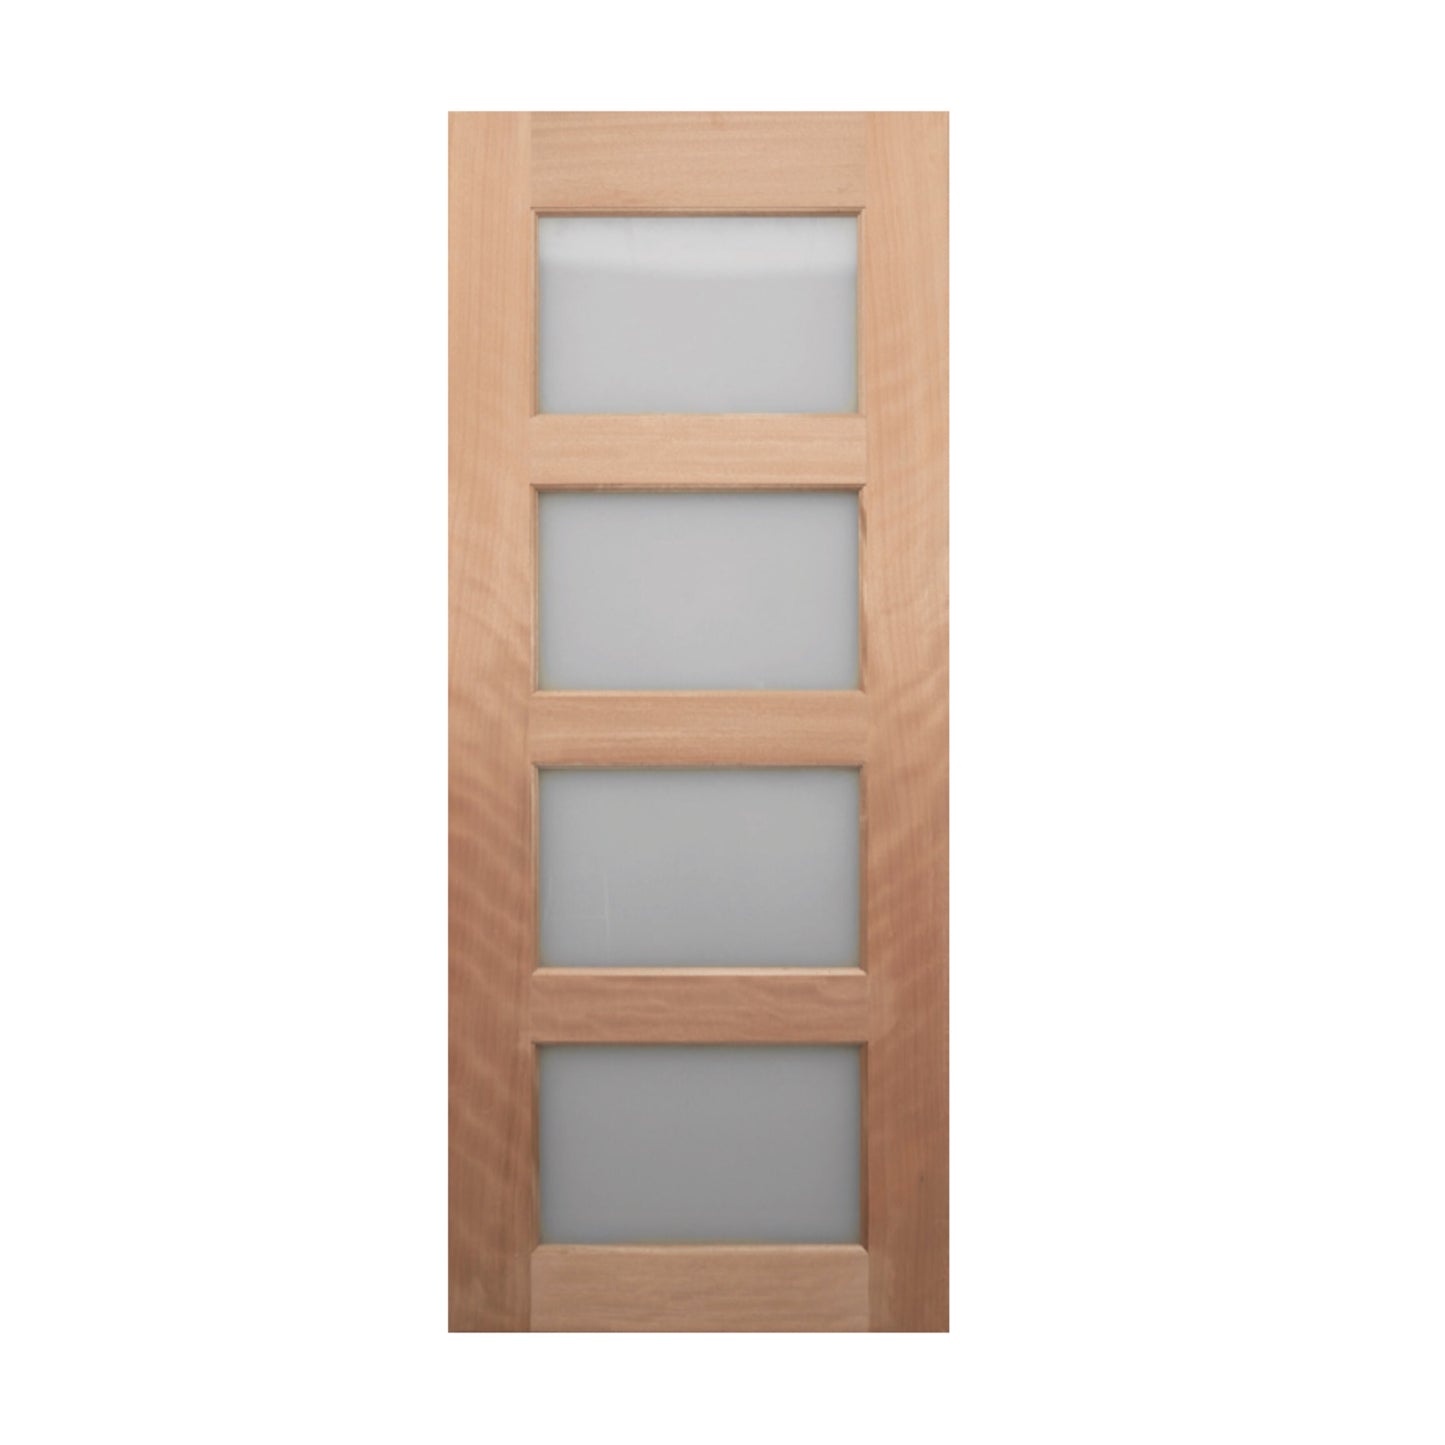 4LB Horizontal Door & Frame Package Installed 820/870/920/1000